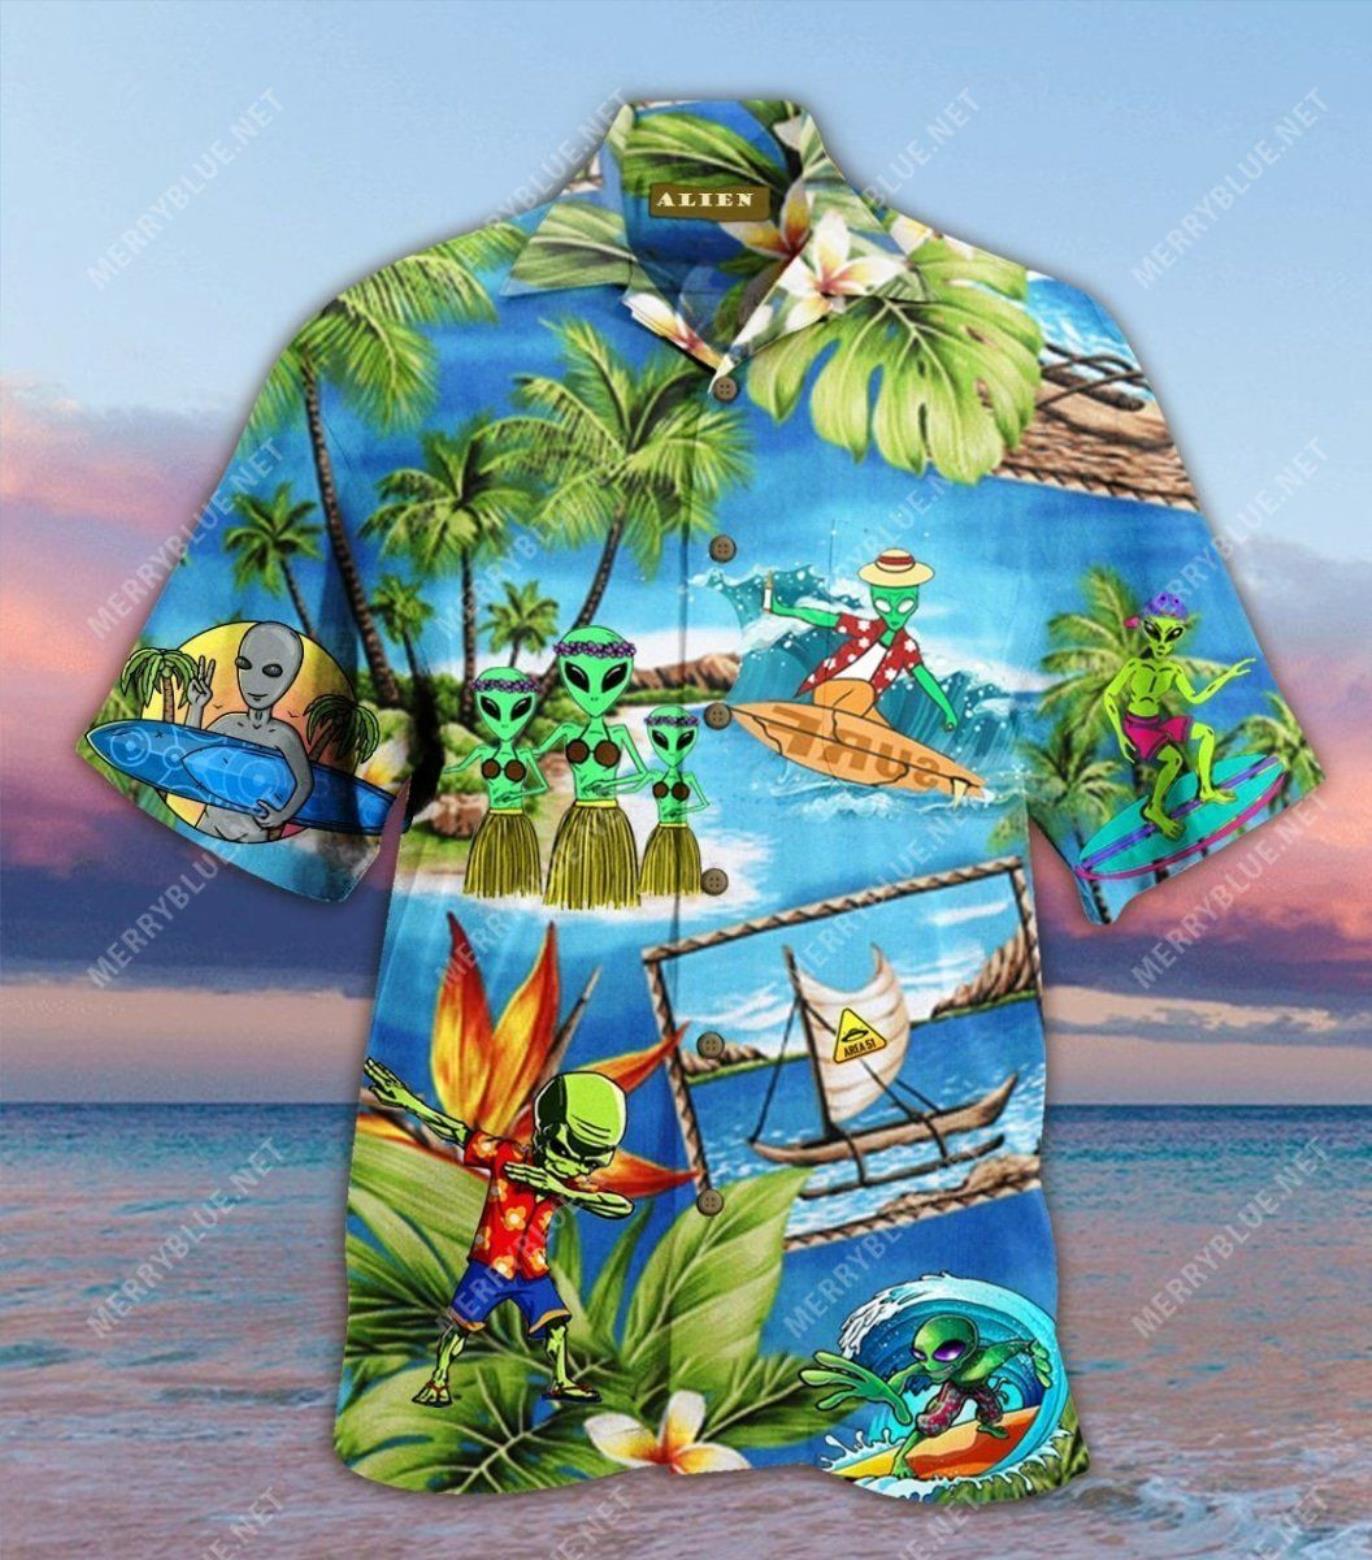 Alien Hawaii Shirt Alien Summer Vacation Blue Hawaiian Shirt Adult Full Printproduct photo 1 Product photo 1